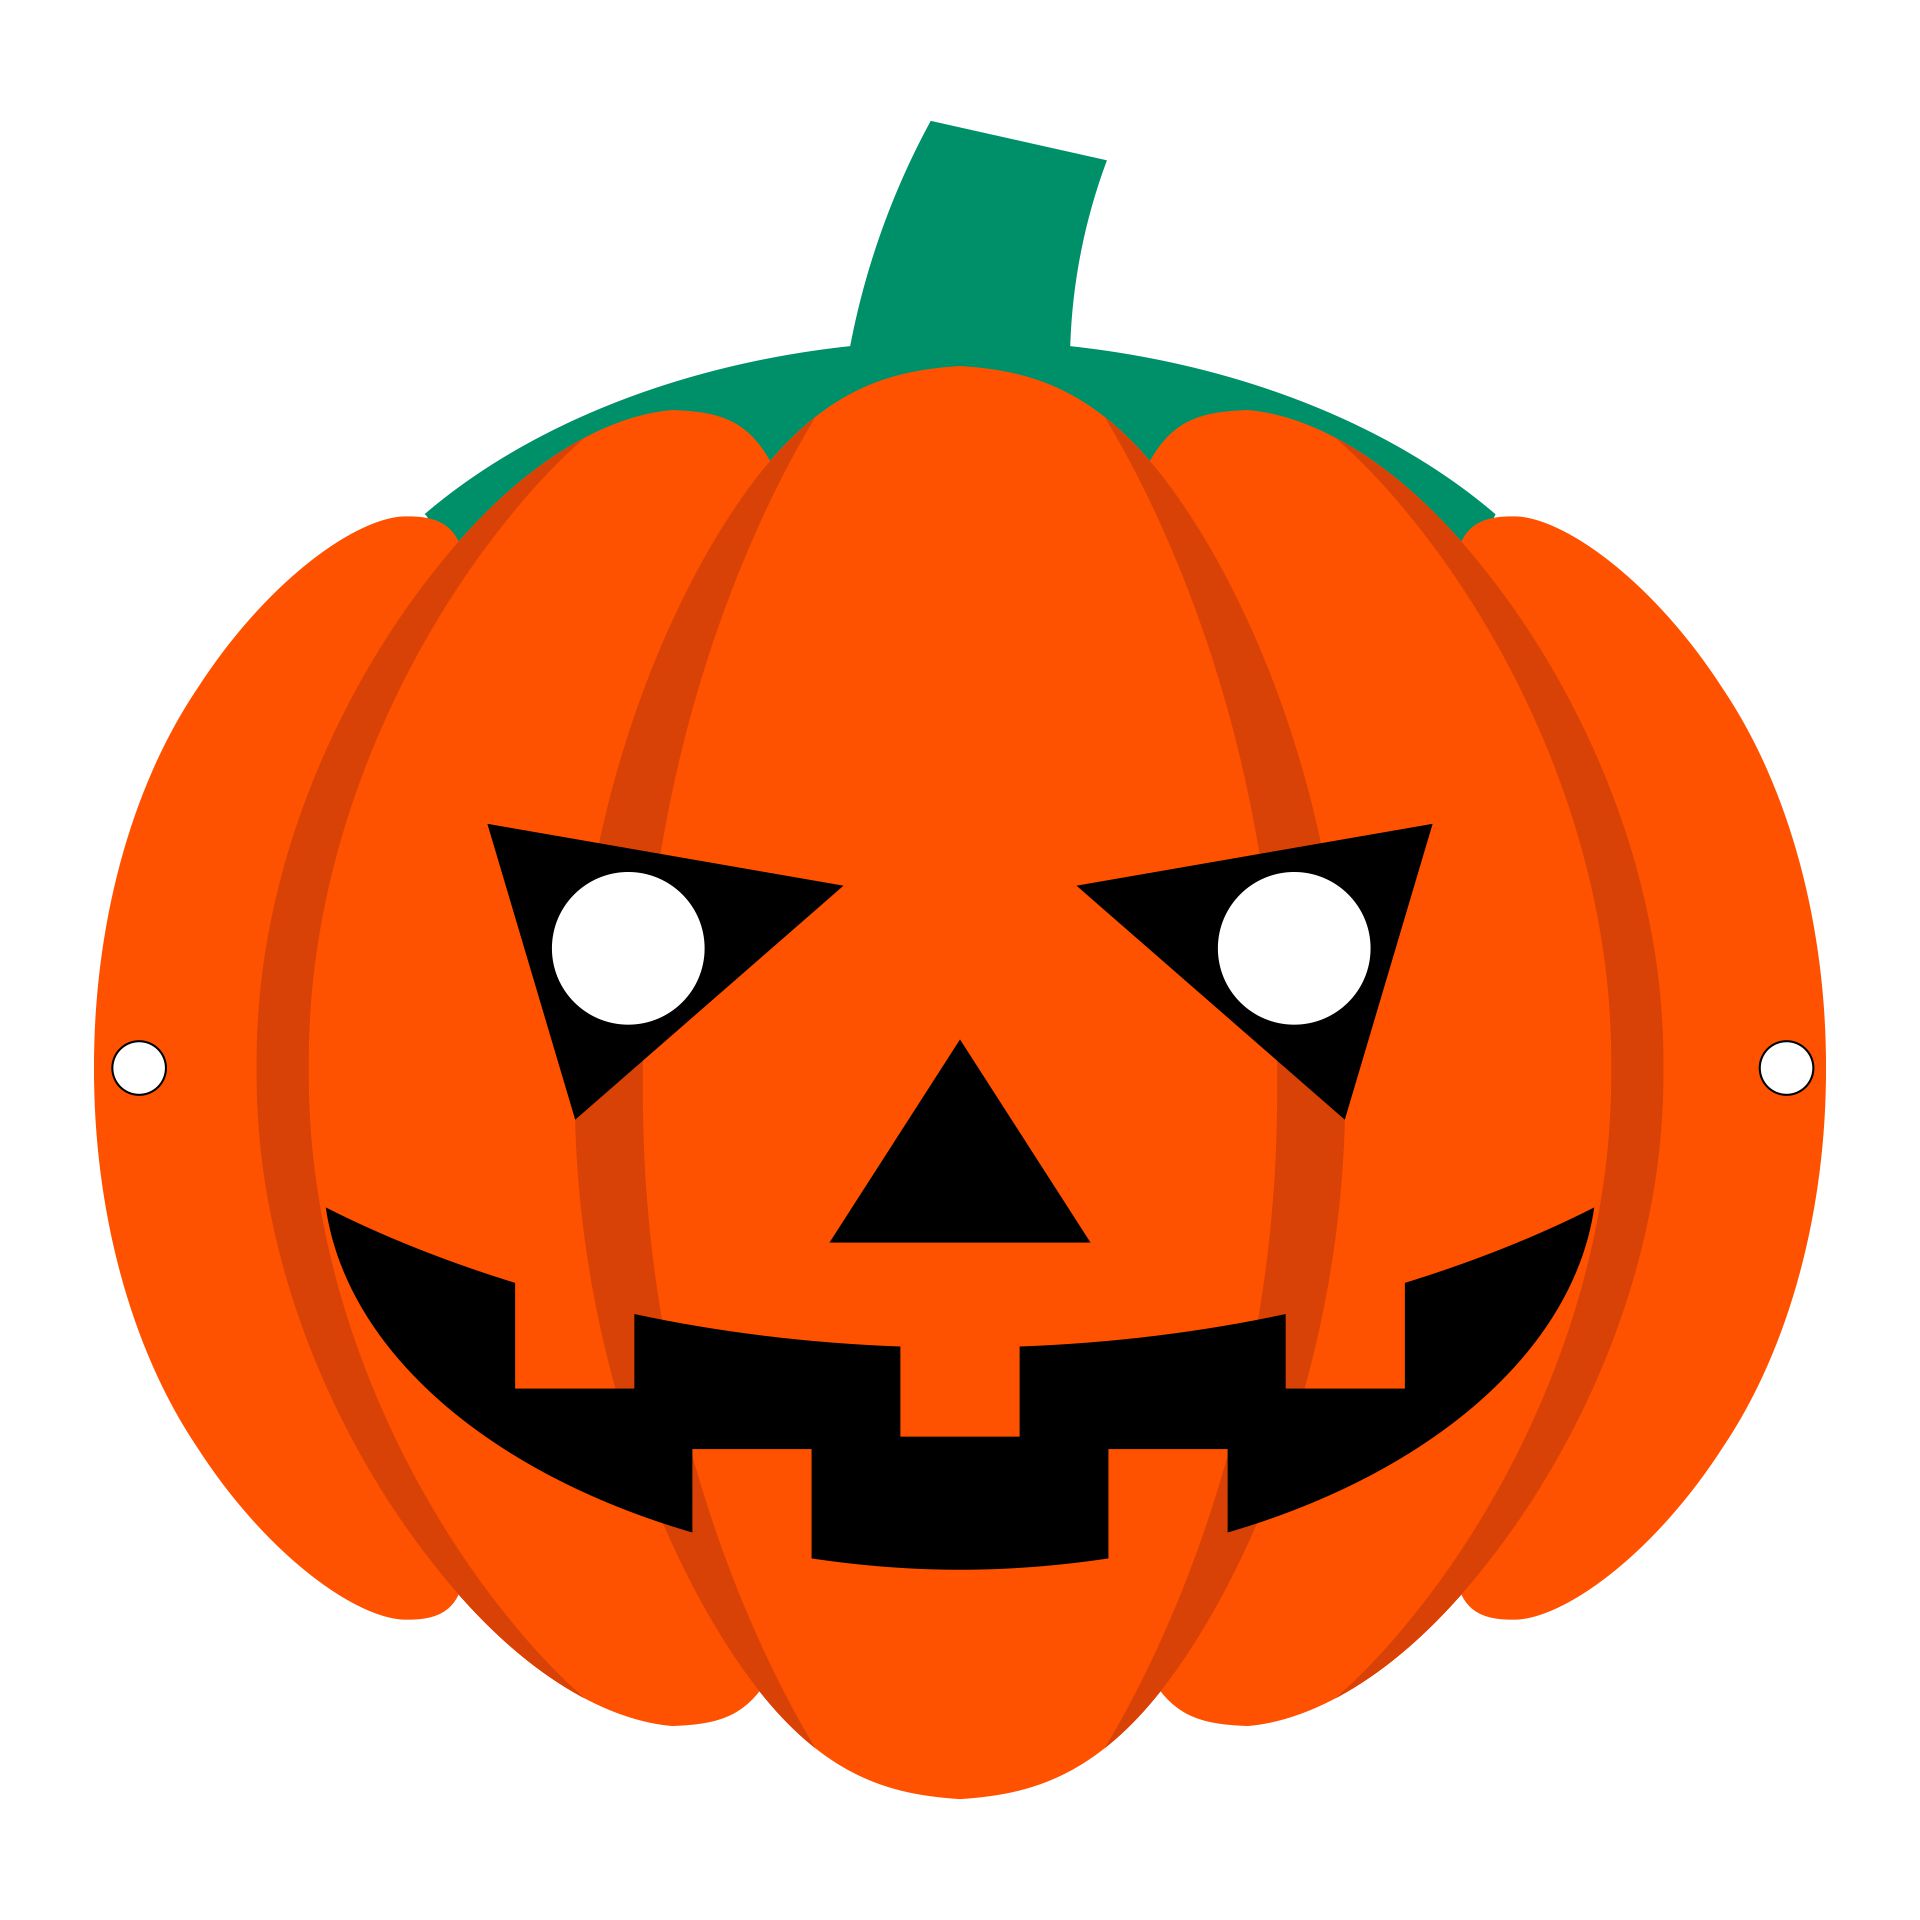 Pumpkin Mask Kids Costume Halloween